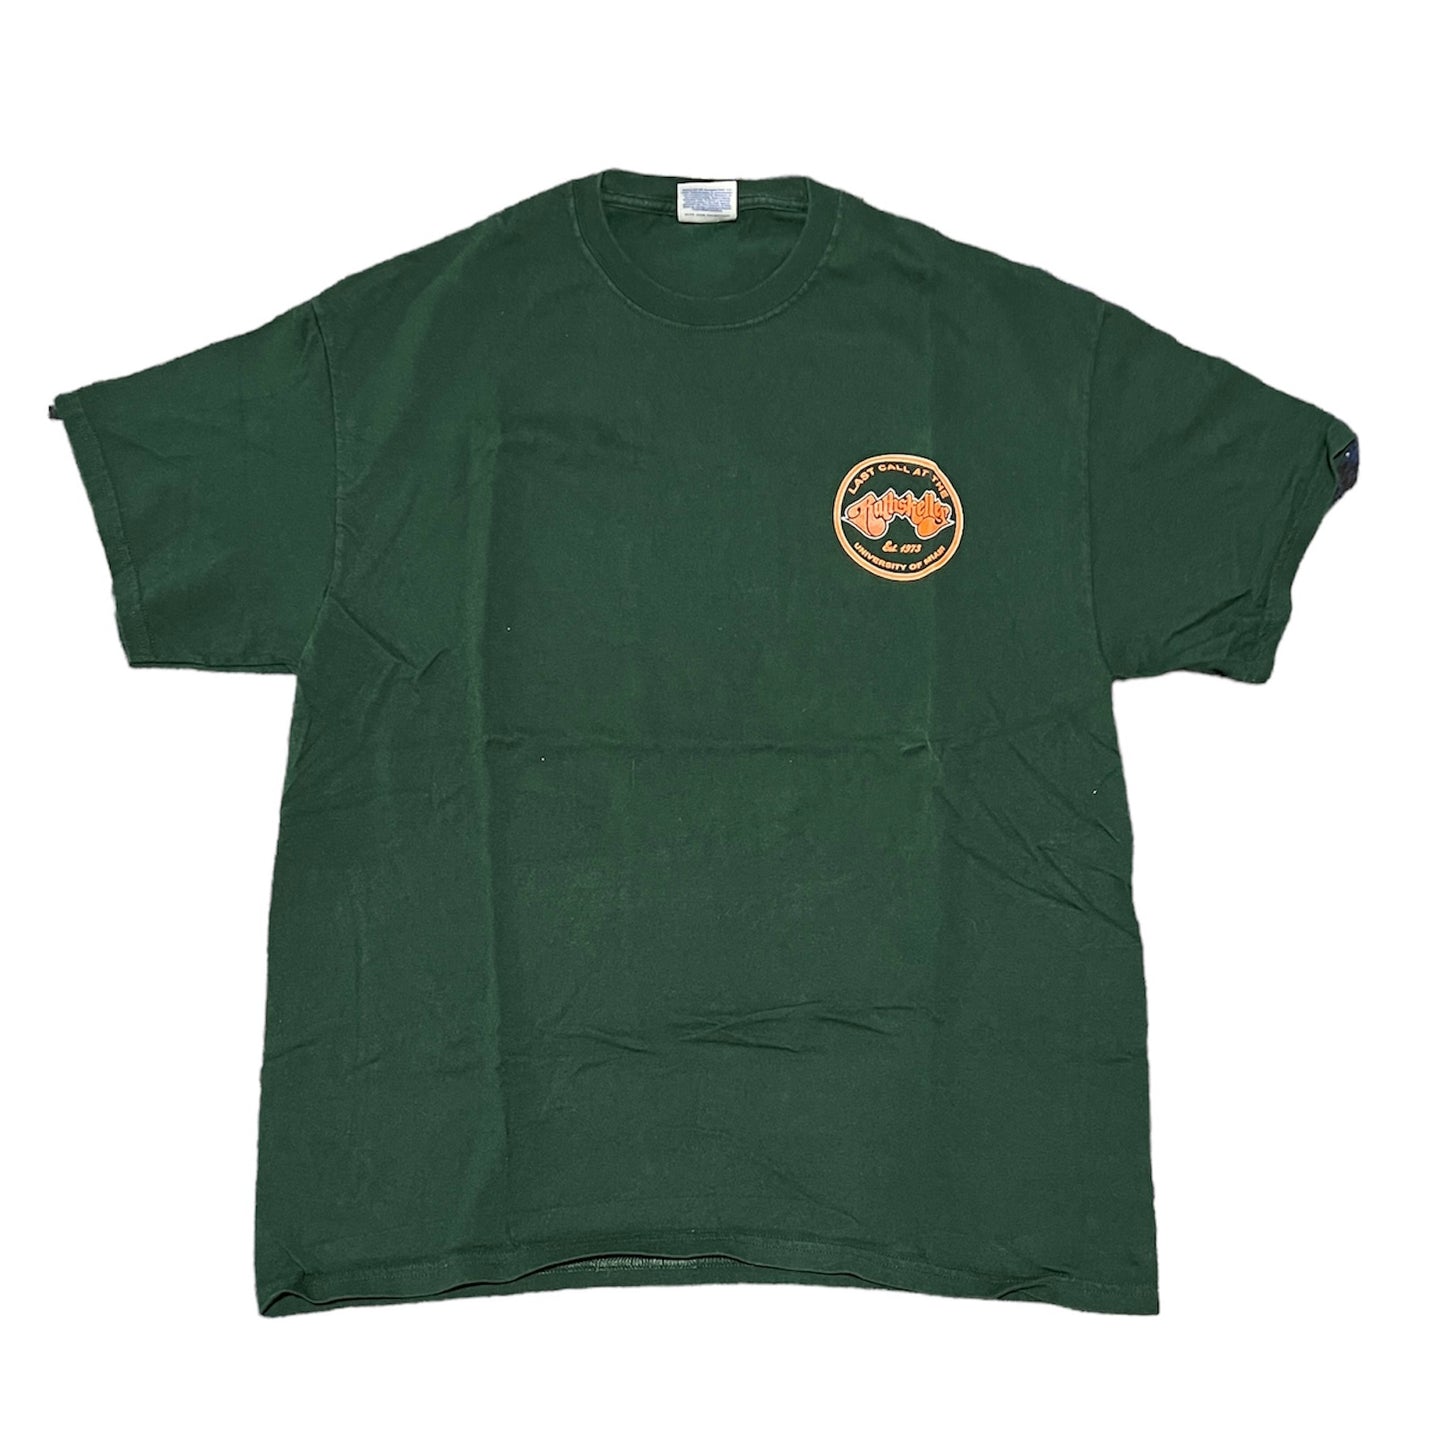 University of Miami Rathskeller T-Shirt Size XL